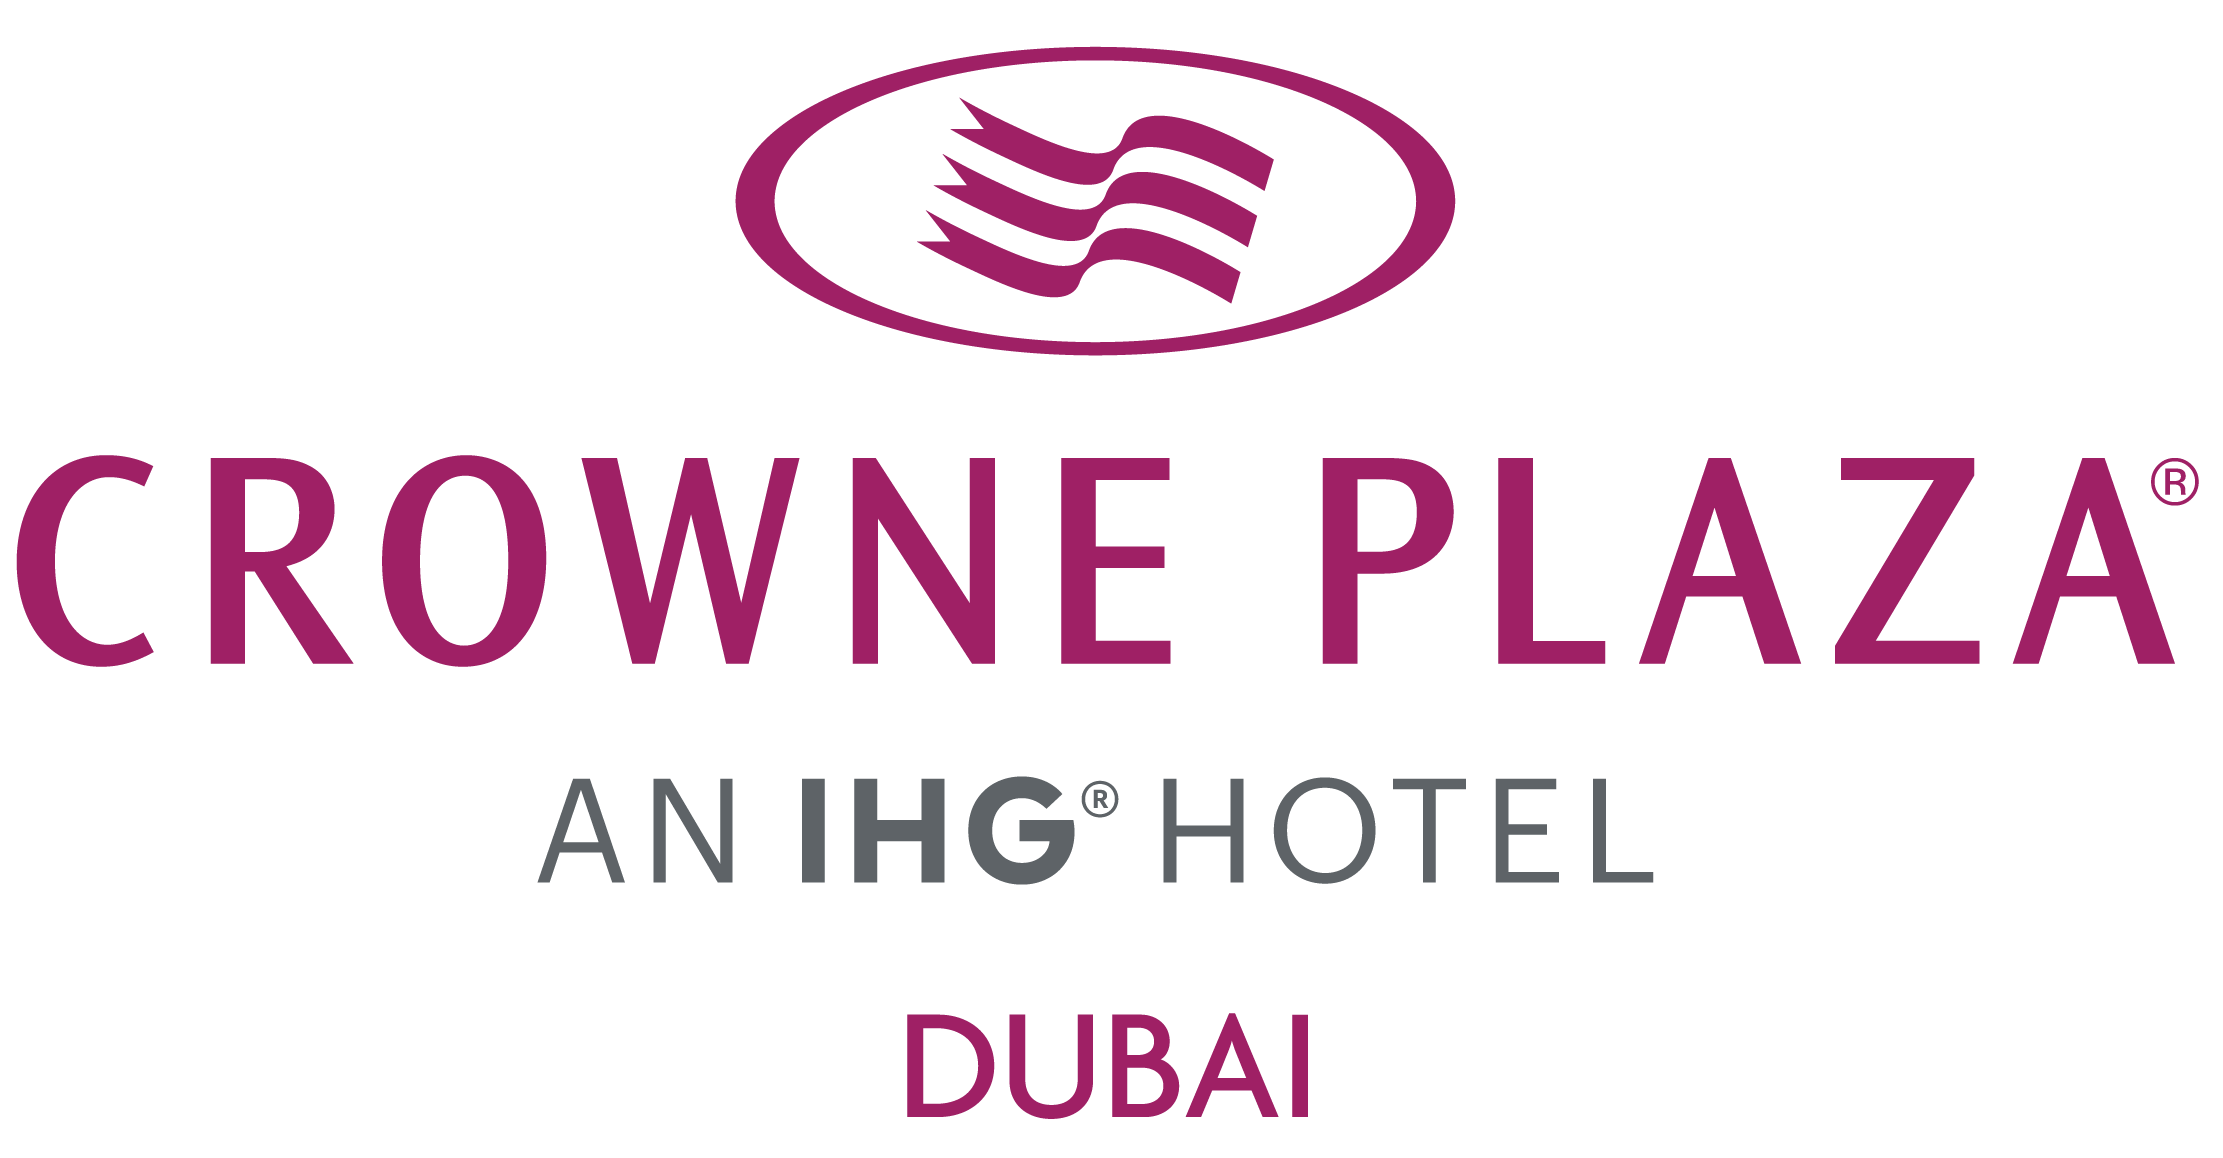 Crowne Plaza Dubai Logo 